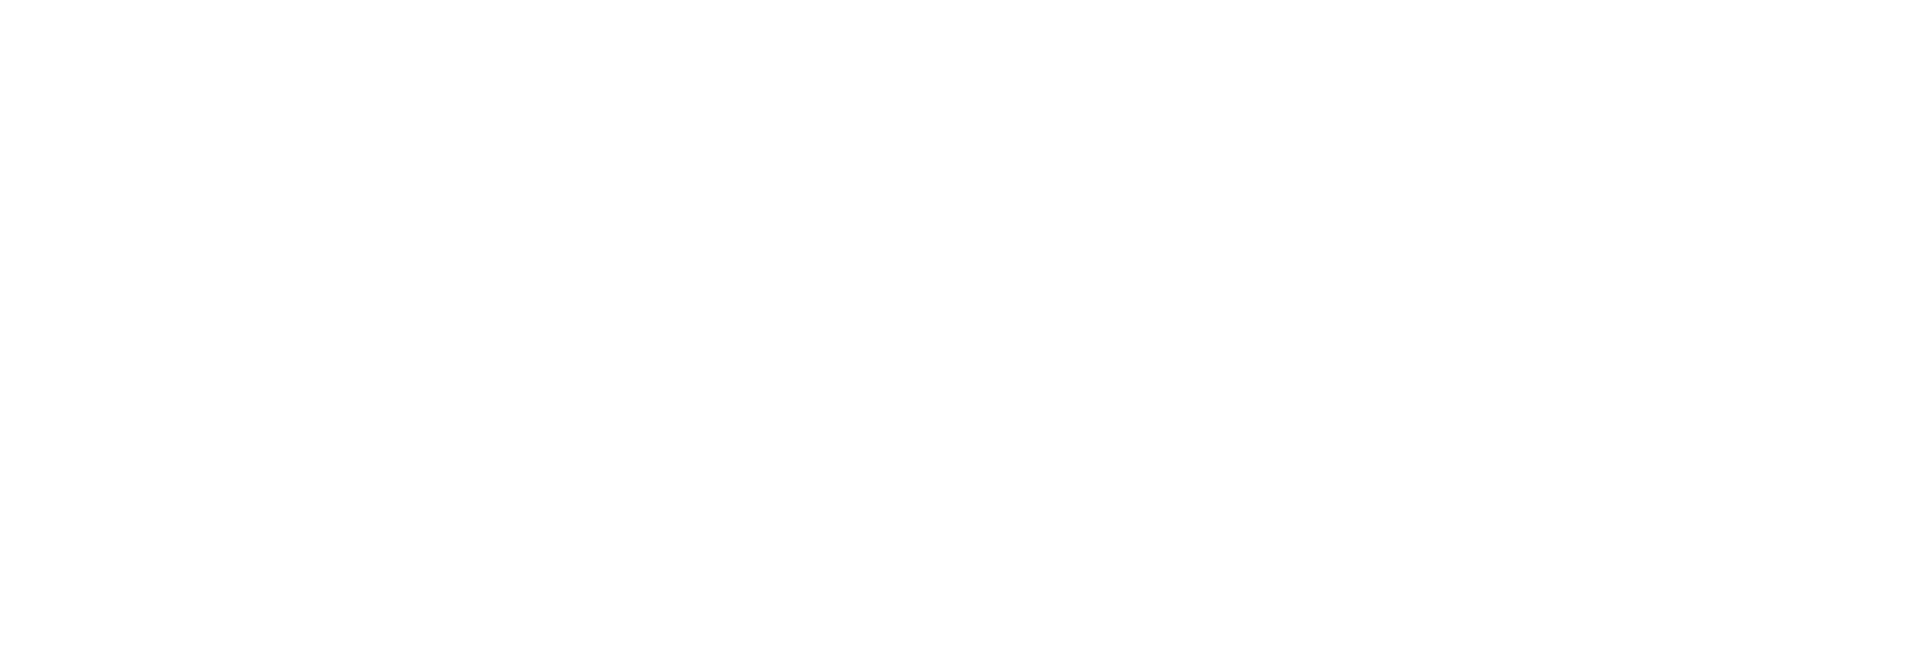 在Starcasino.be上玩Oros Gaming游戏